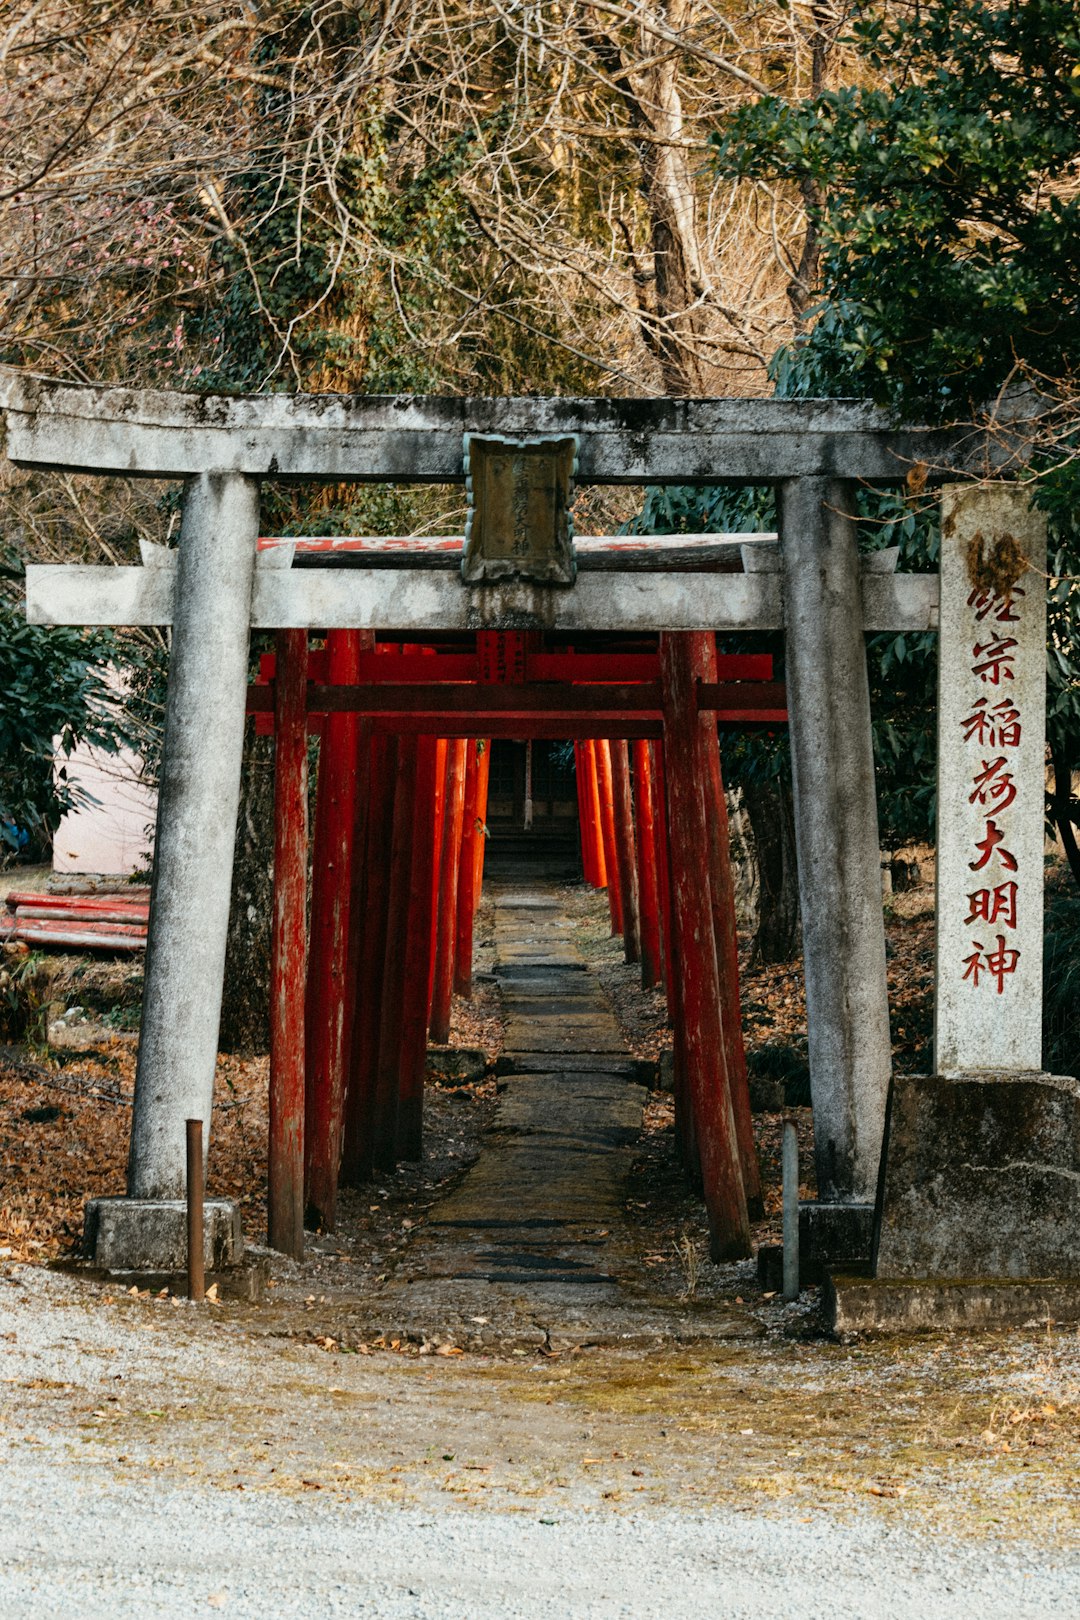 Travel Tips and Stories of Kinugawa Onsen in Japan